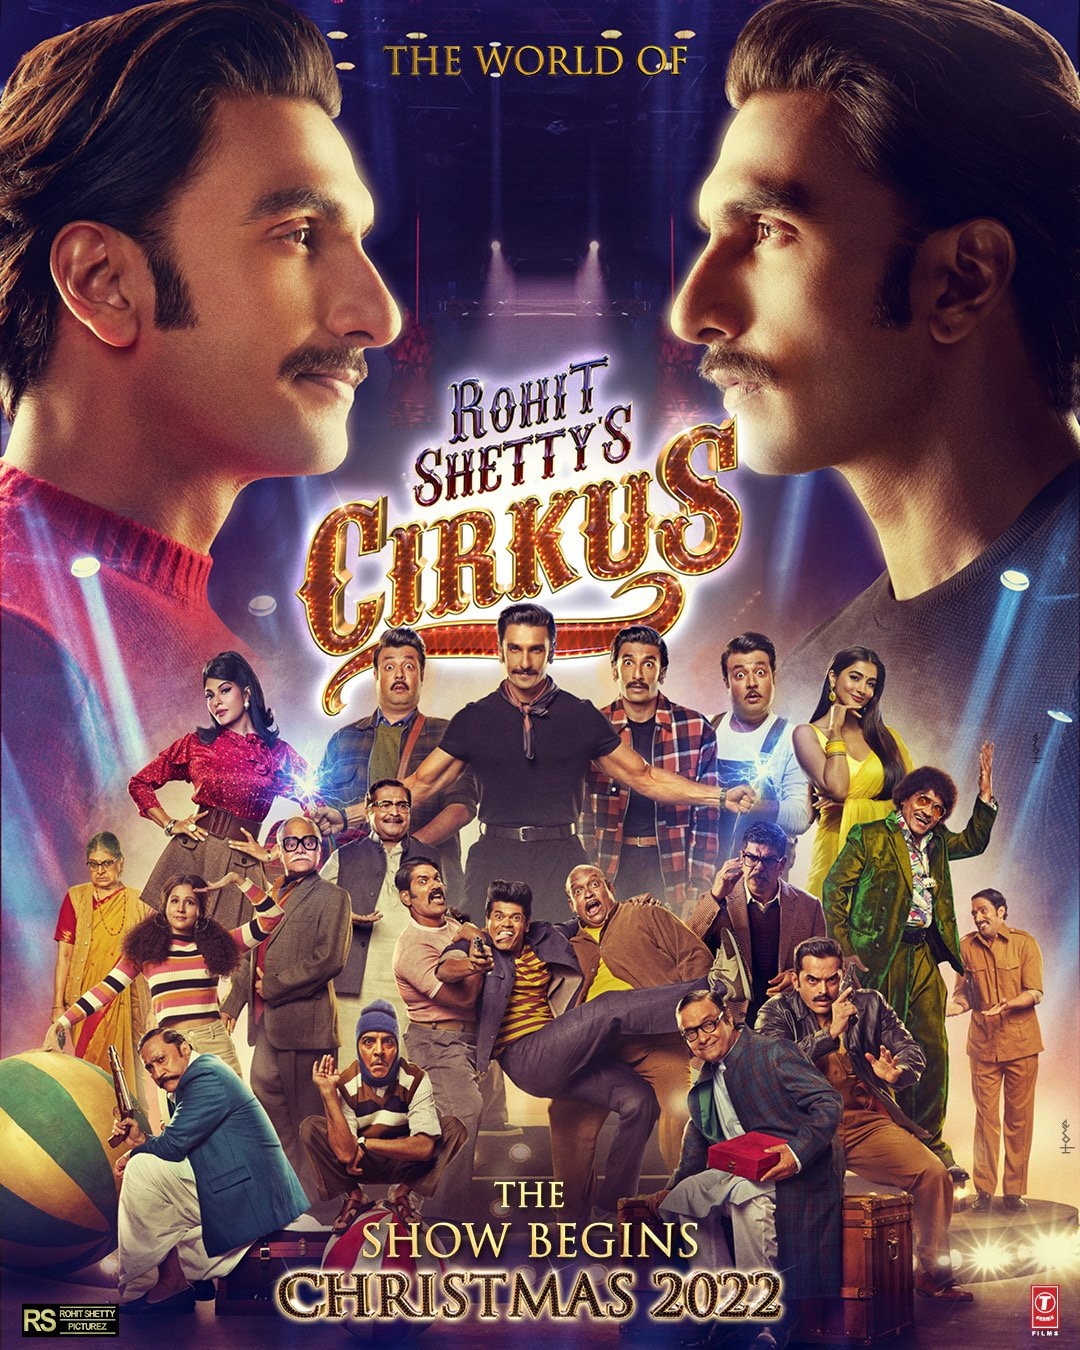 cirkus movie review imdb rating